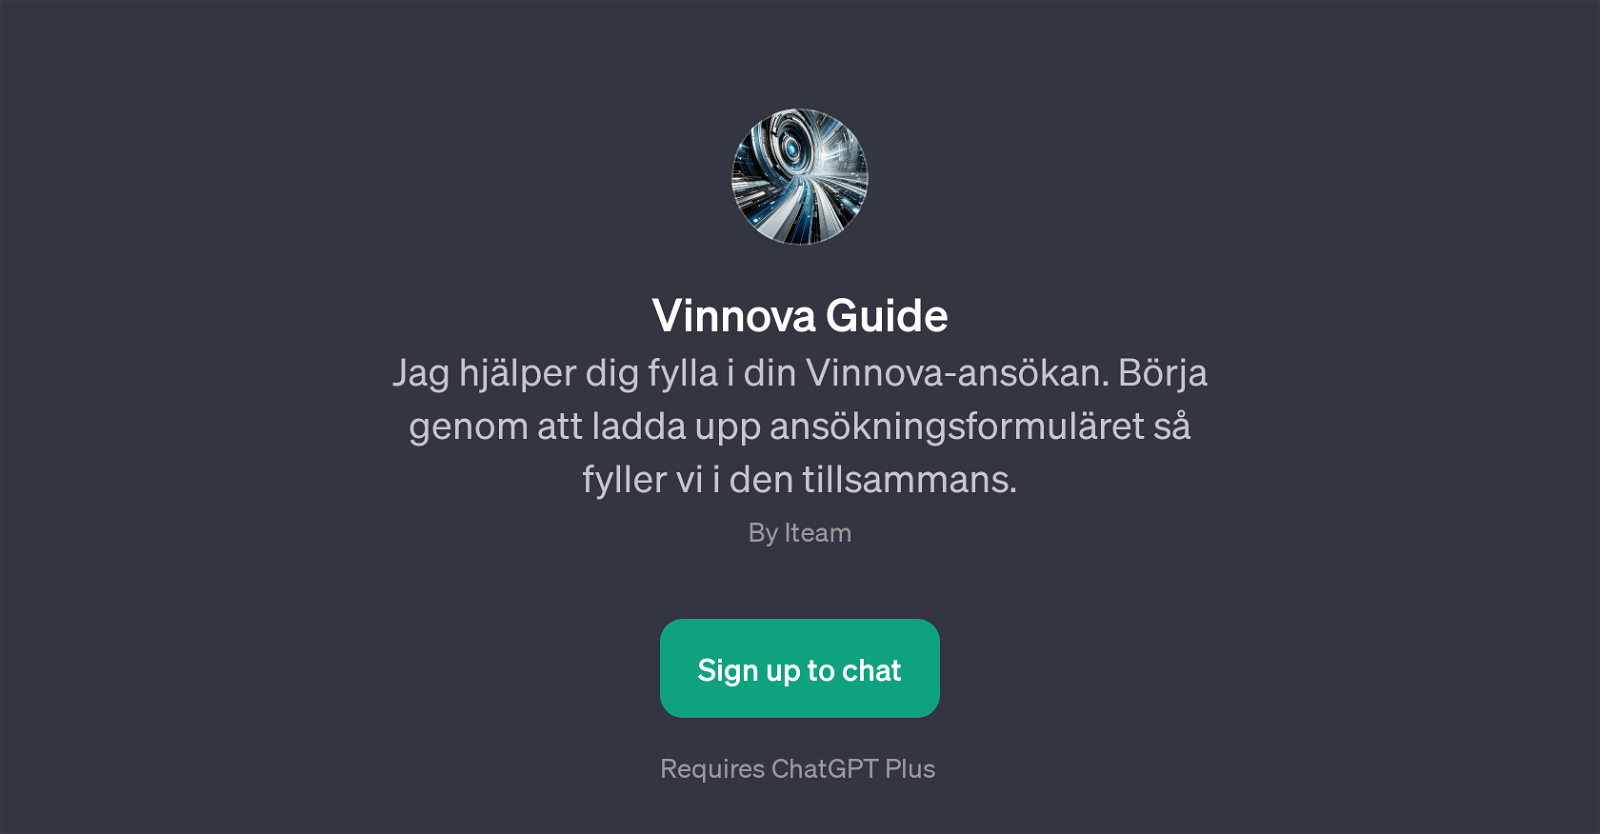 Vinnova Guide website